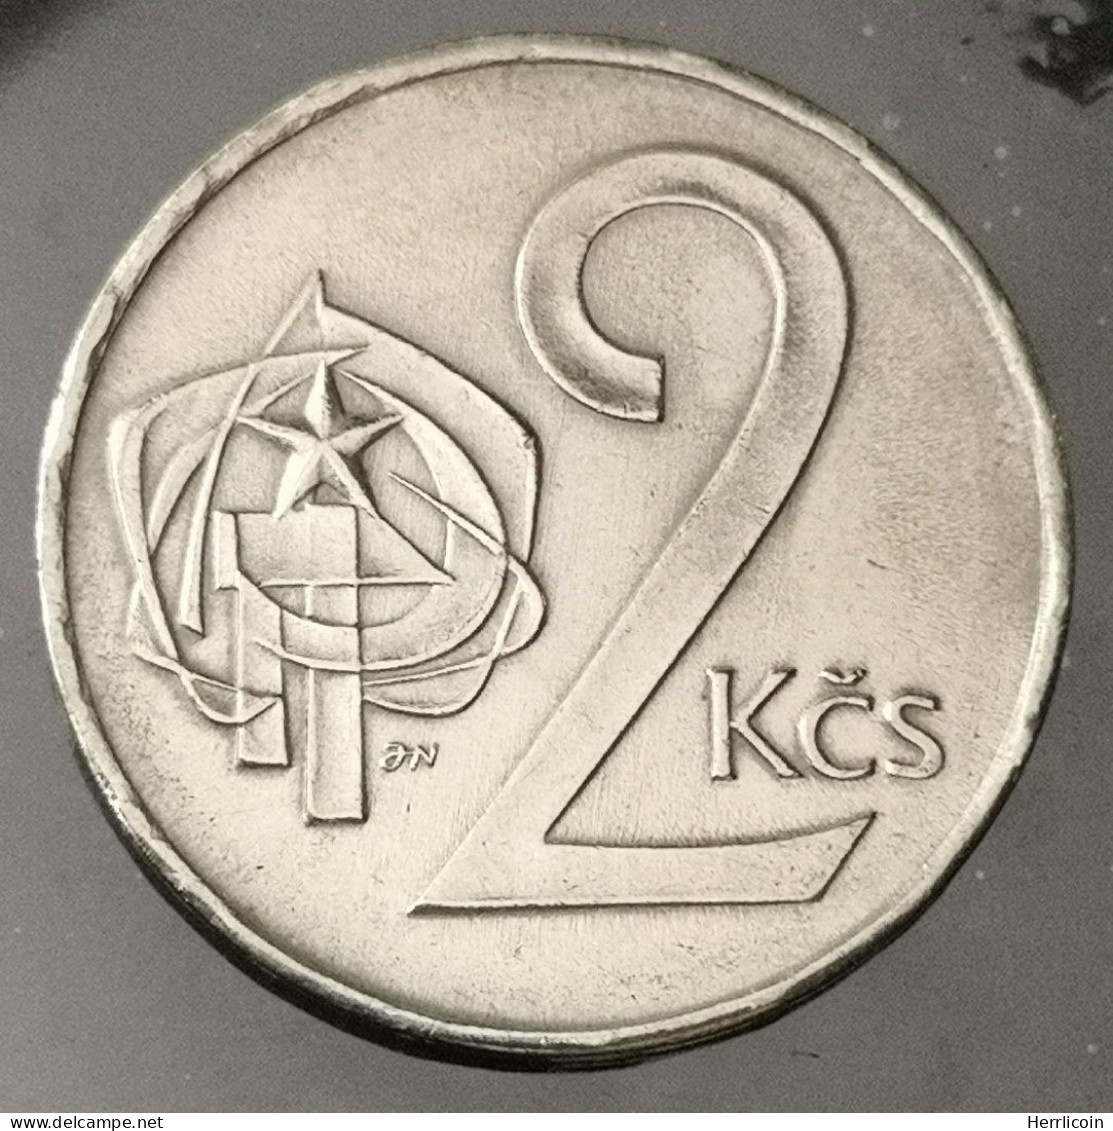 Monnaie Slovaquie - 1972 - 2 Koruny - Slowakije